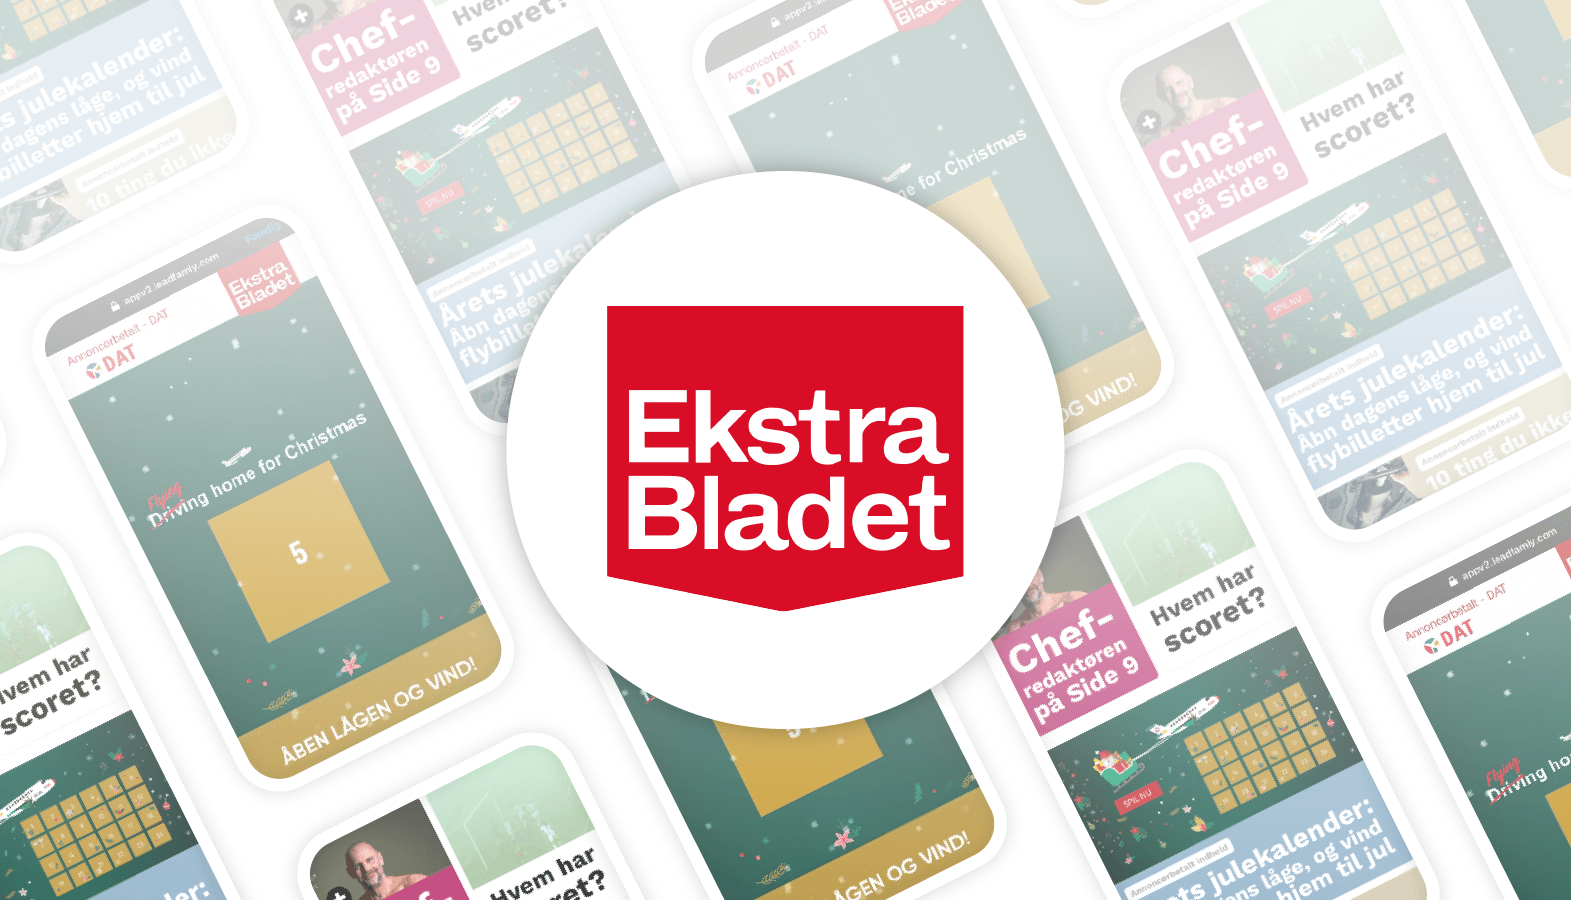 Ekstra Bladet Customer Story with Playable